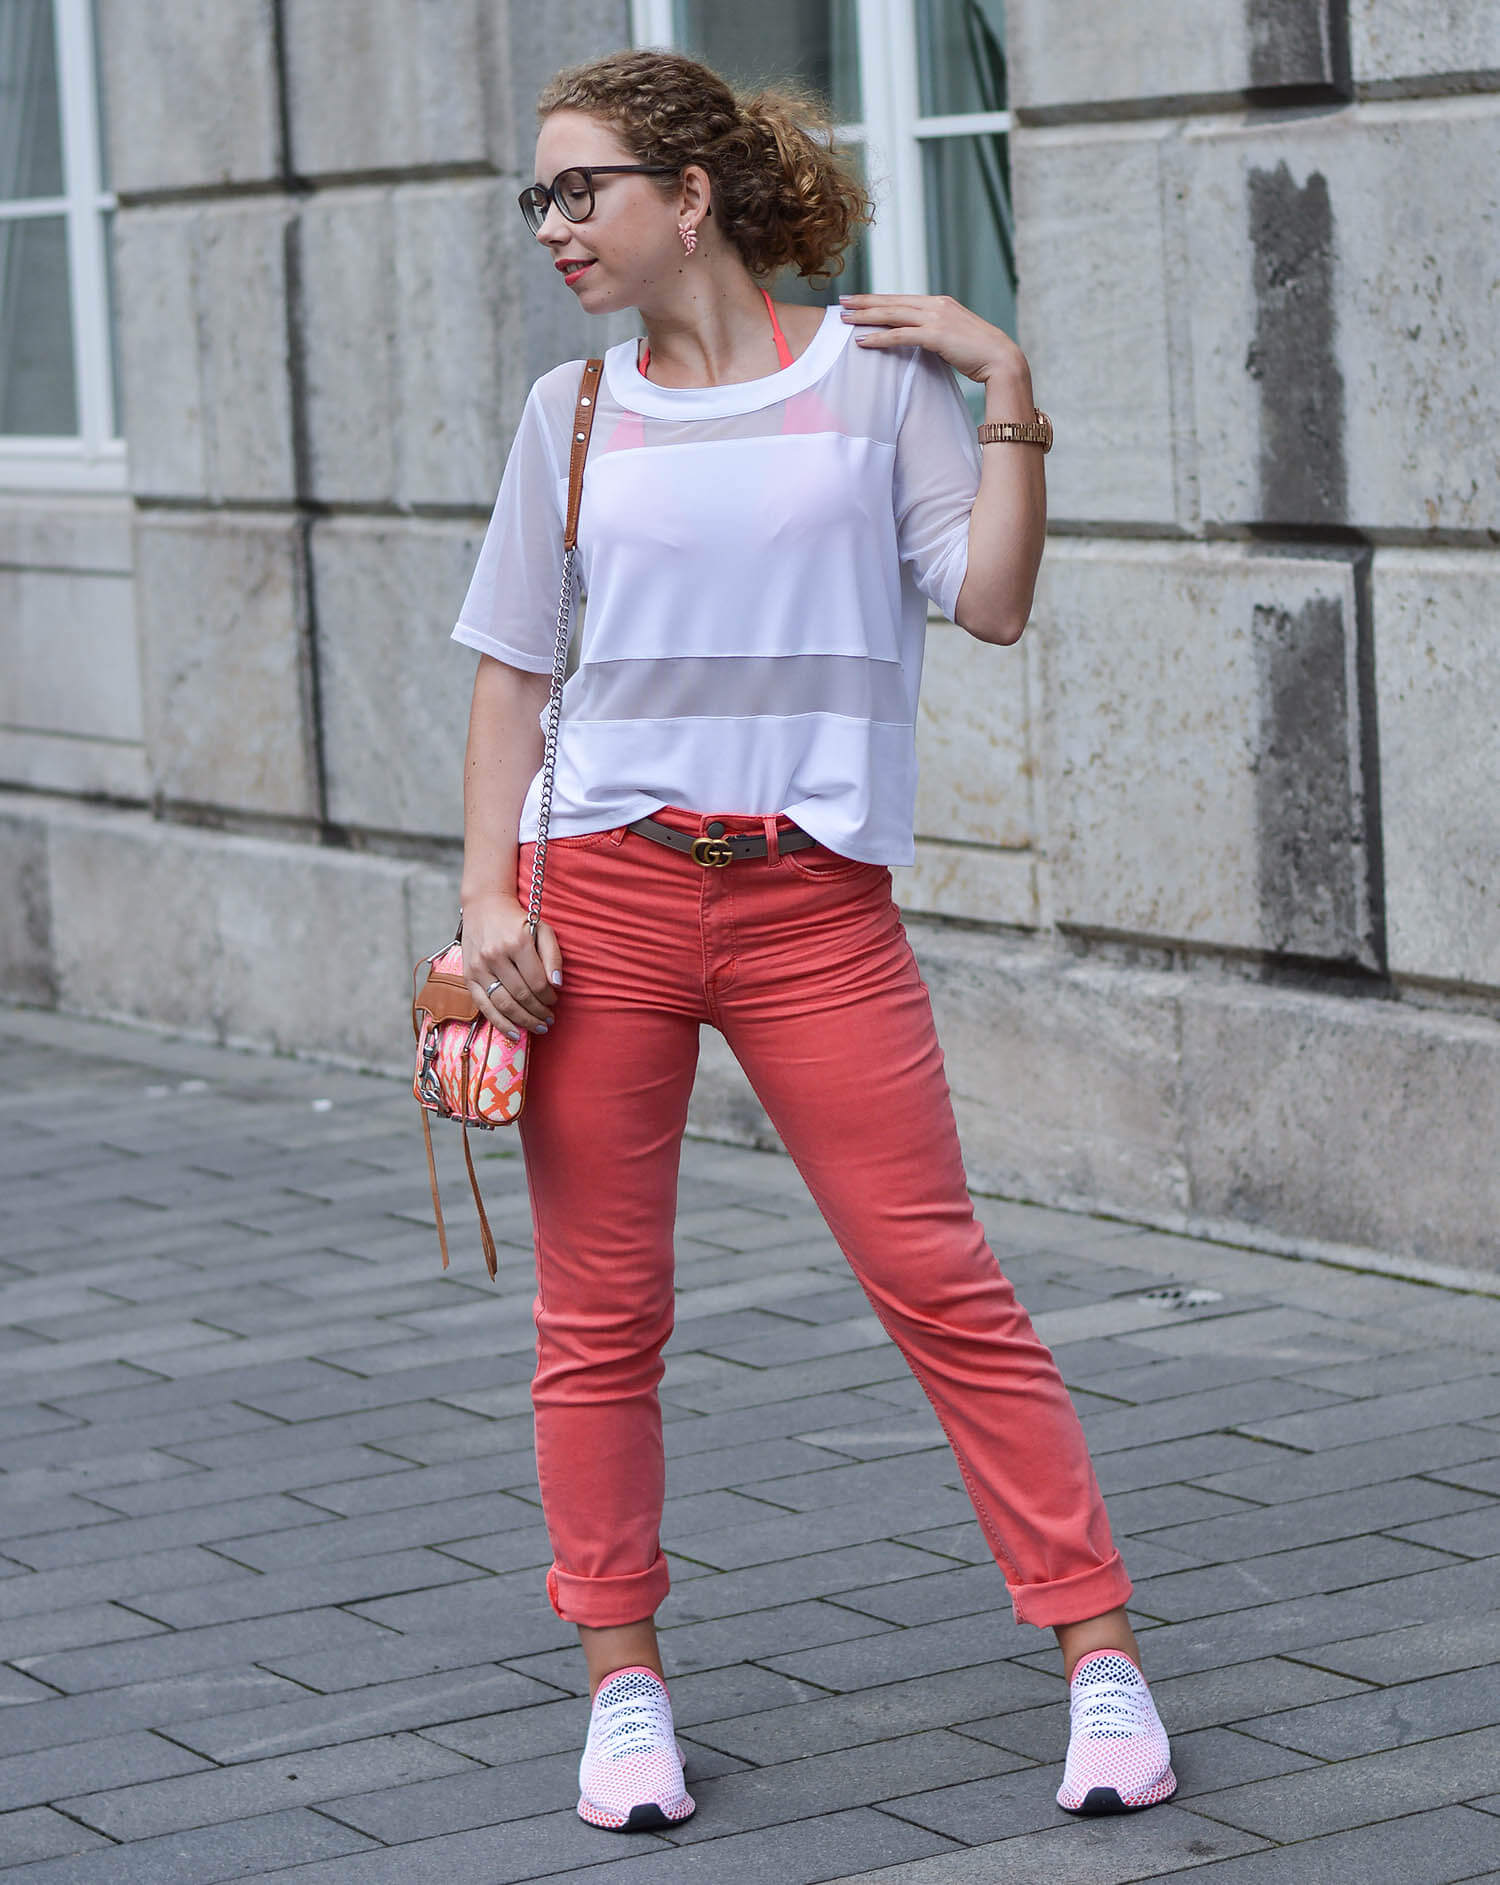 Coral-colored-denim-pants-adidas-deerupt-runner-rebecca-minkoff-bag-kationette-fashionblogger-nrw-outfit